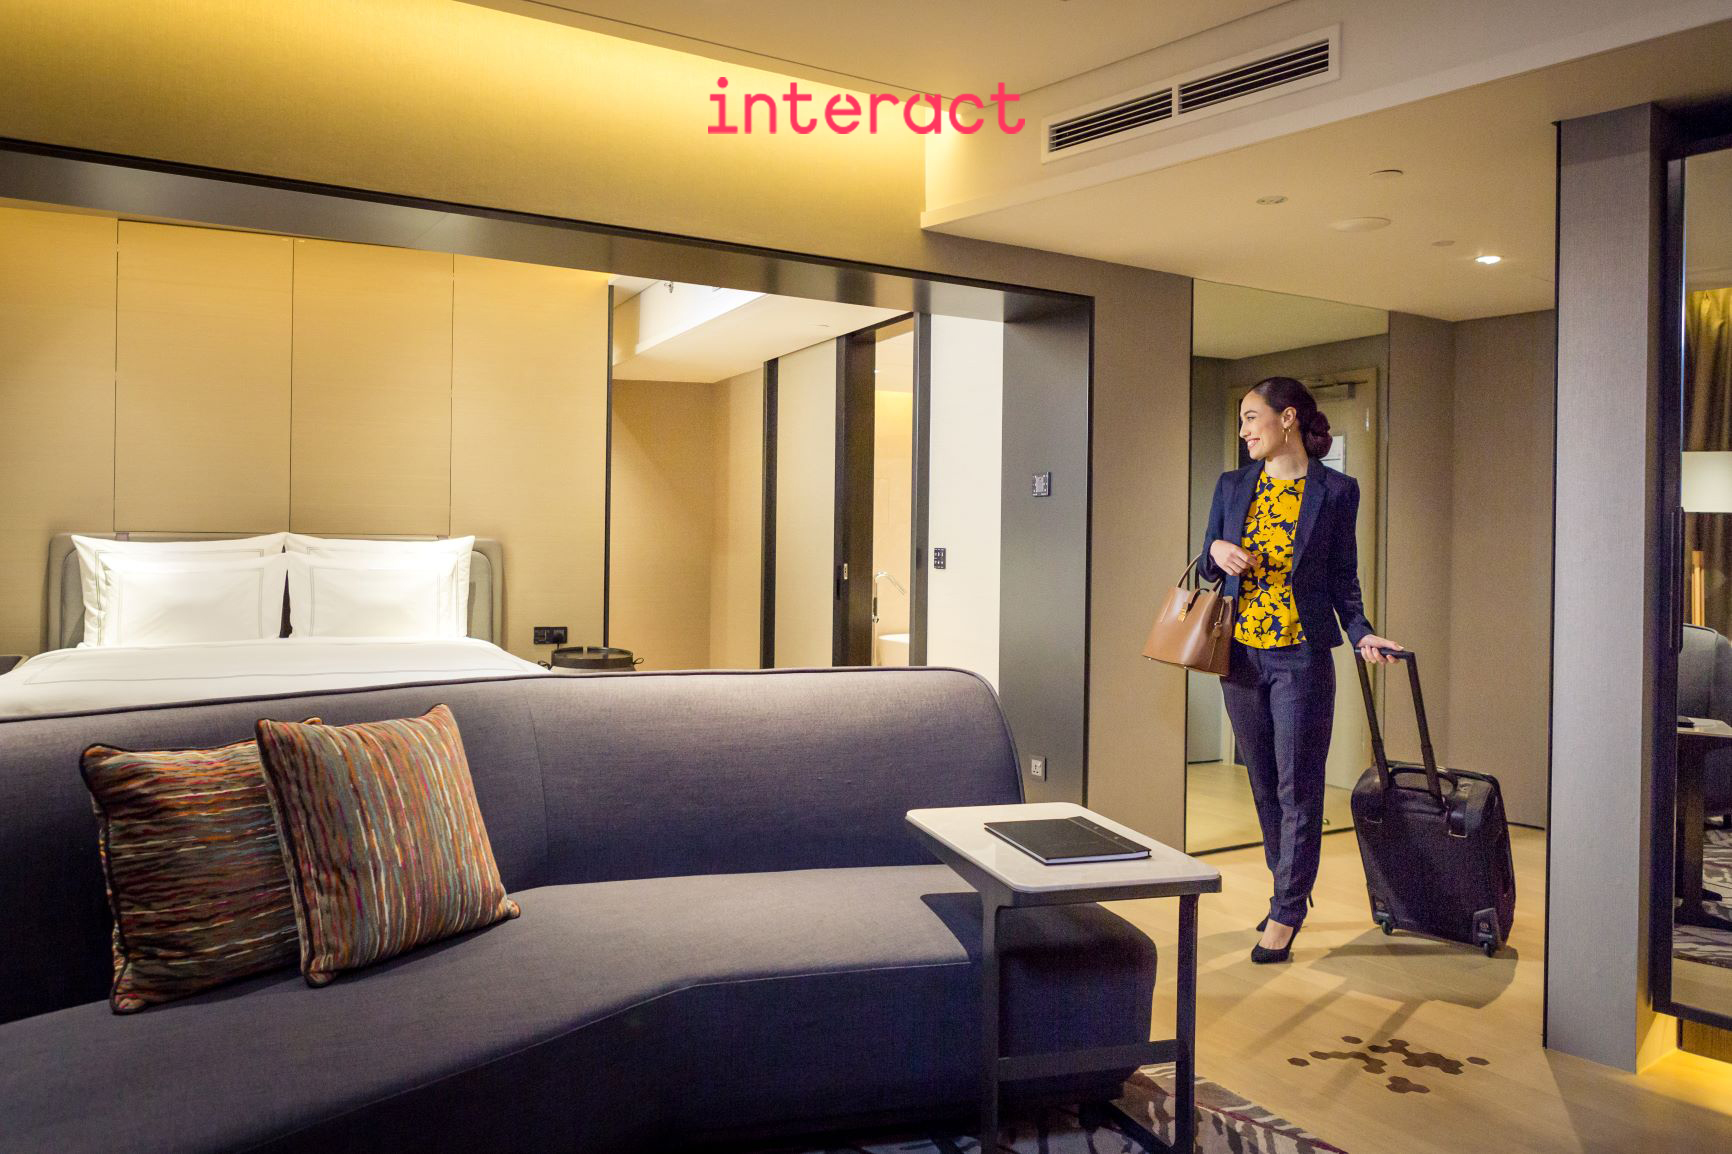 Interact酒店智能互联酒店系统为宾客创造智能、贴心入住体验